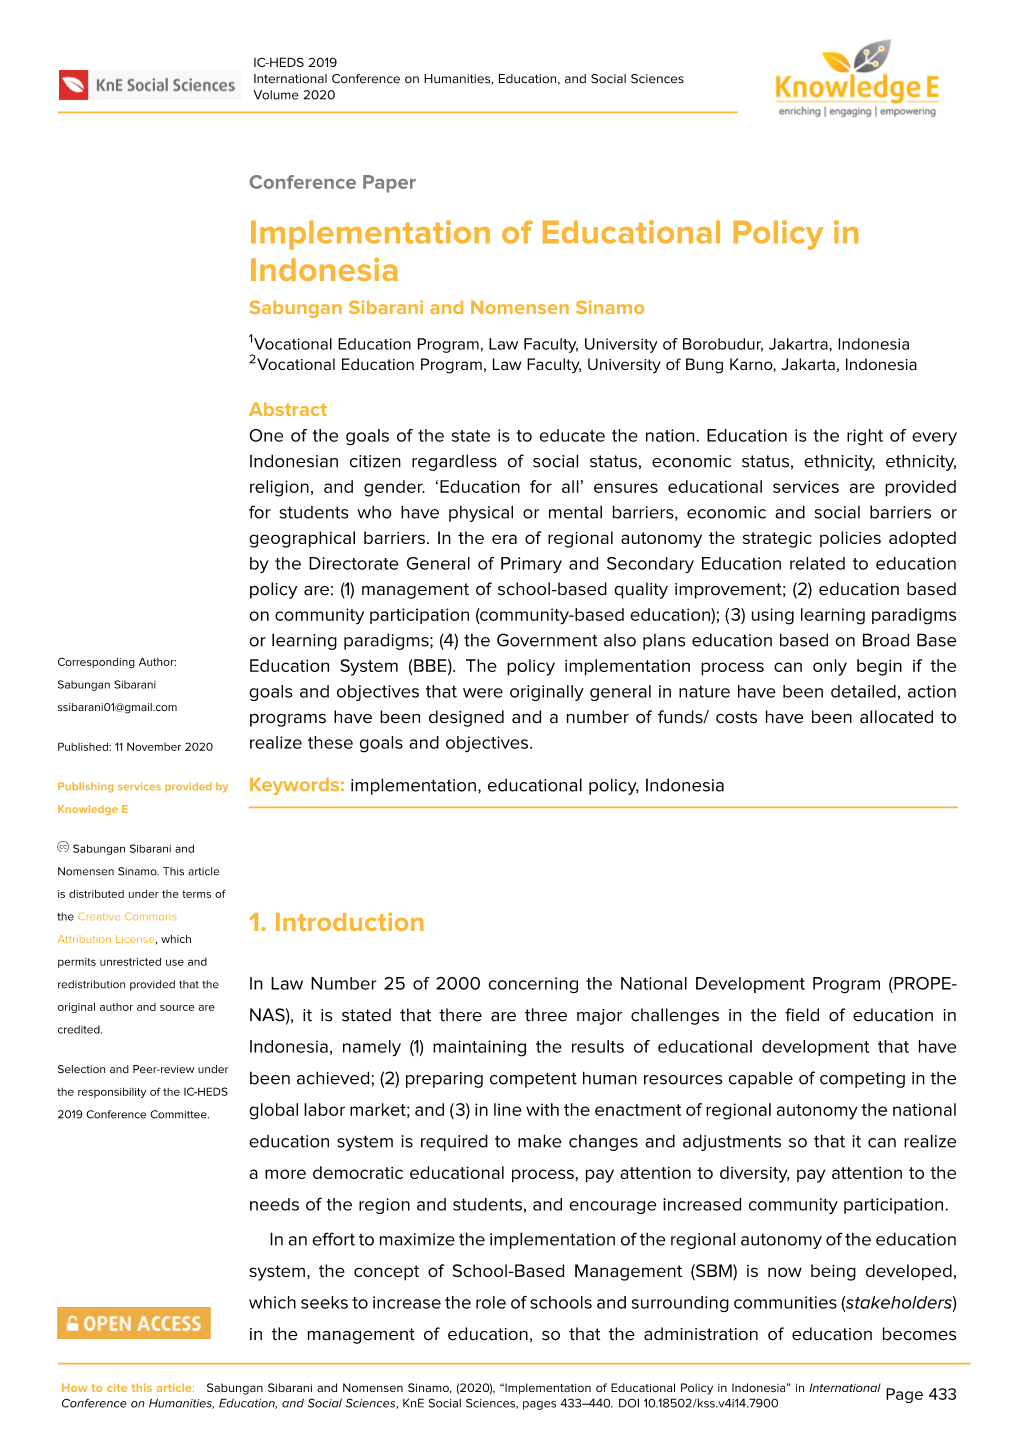 Implementation of Educational Policy in Indonesia Sabungan Sibarani and Nomensen Sinamo